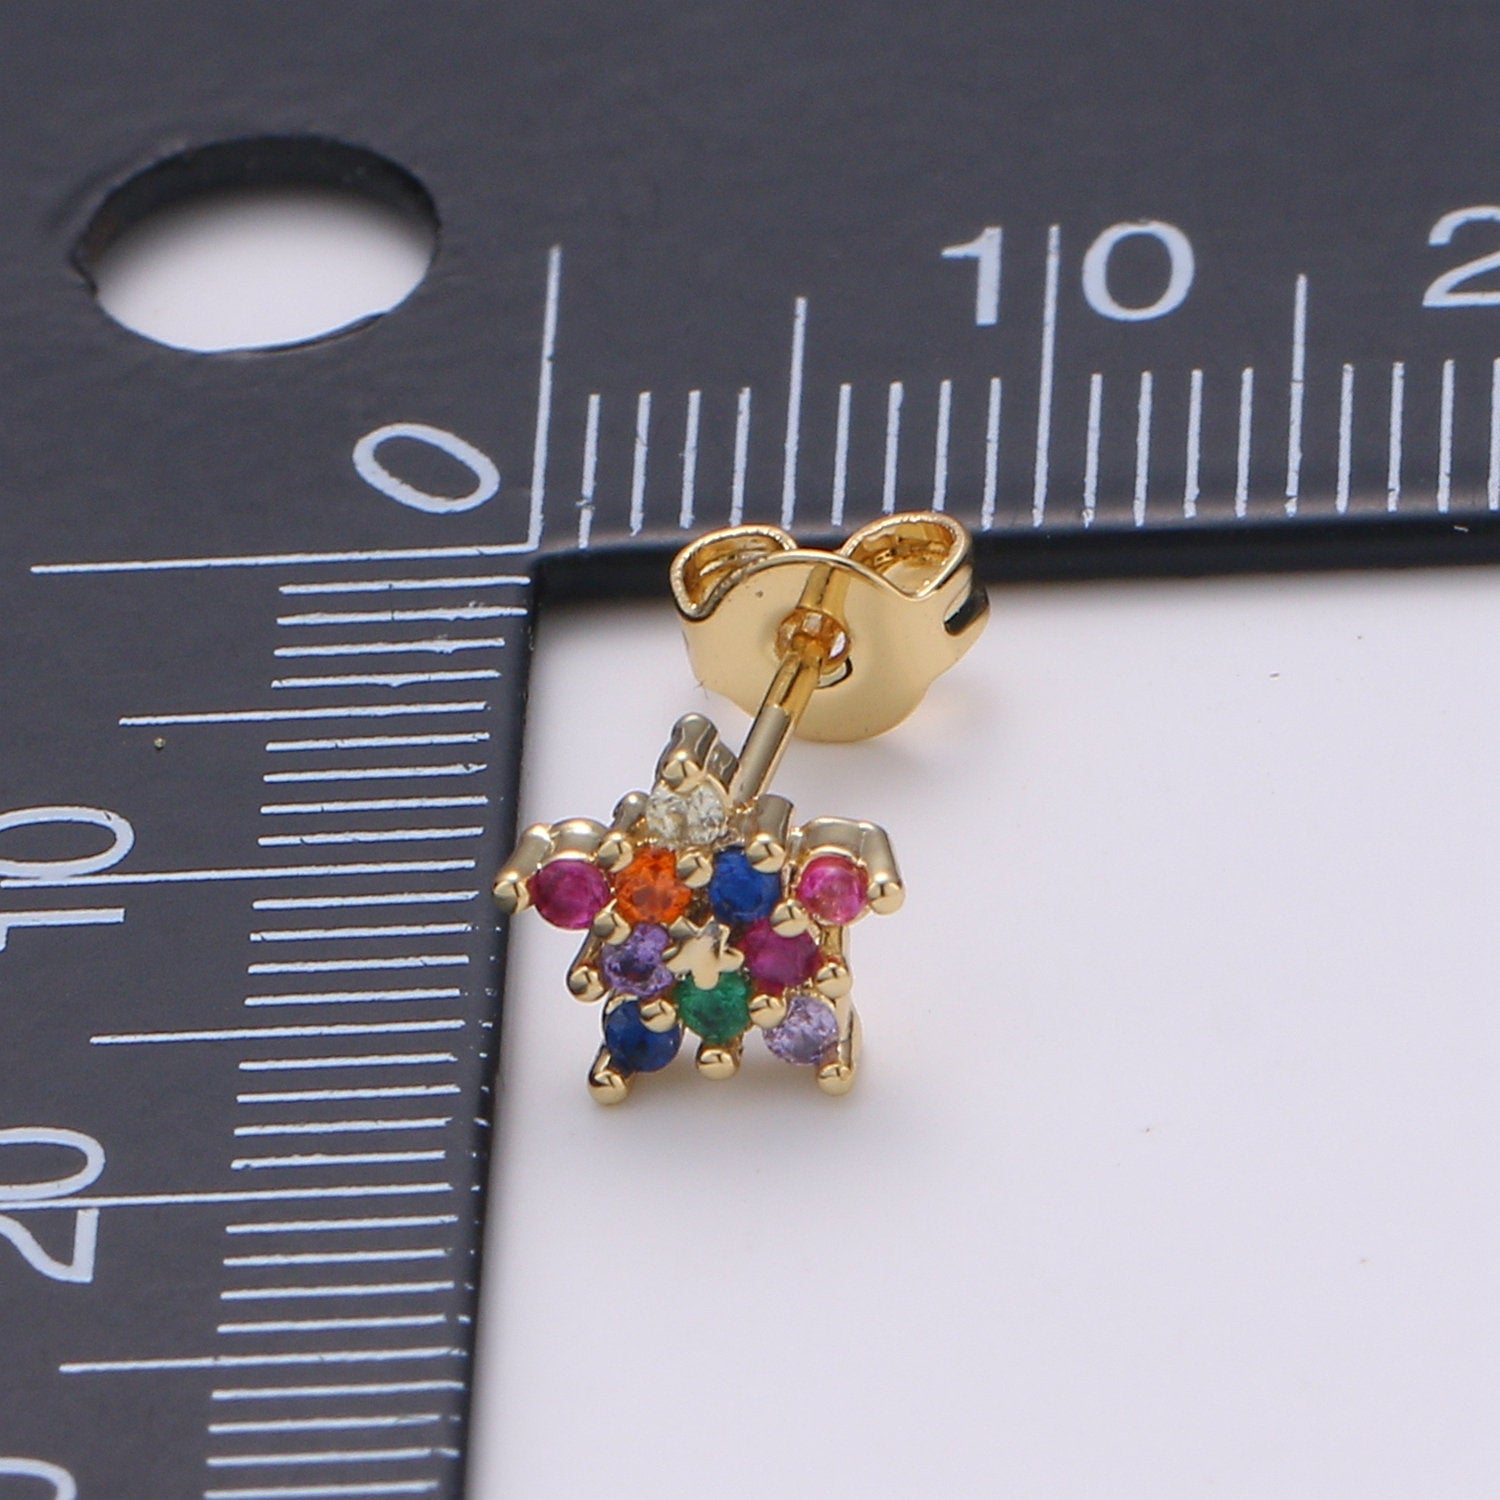 Star stud earrings Gold Multi Color Cz earrings, dainty Earring studs, tiny studs gold, tiny earrings, Multi Color studs - DLUXCA